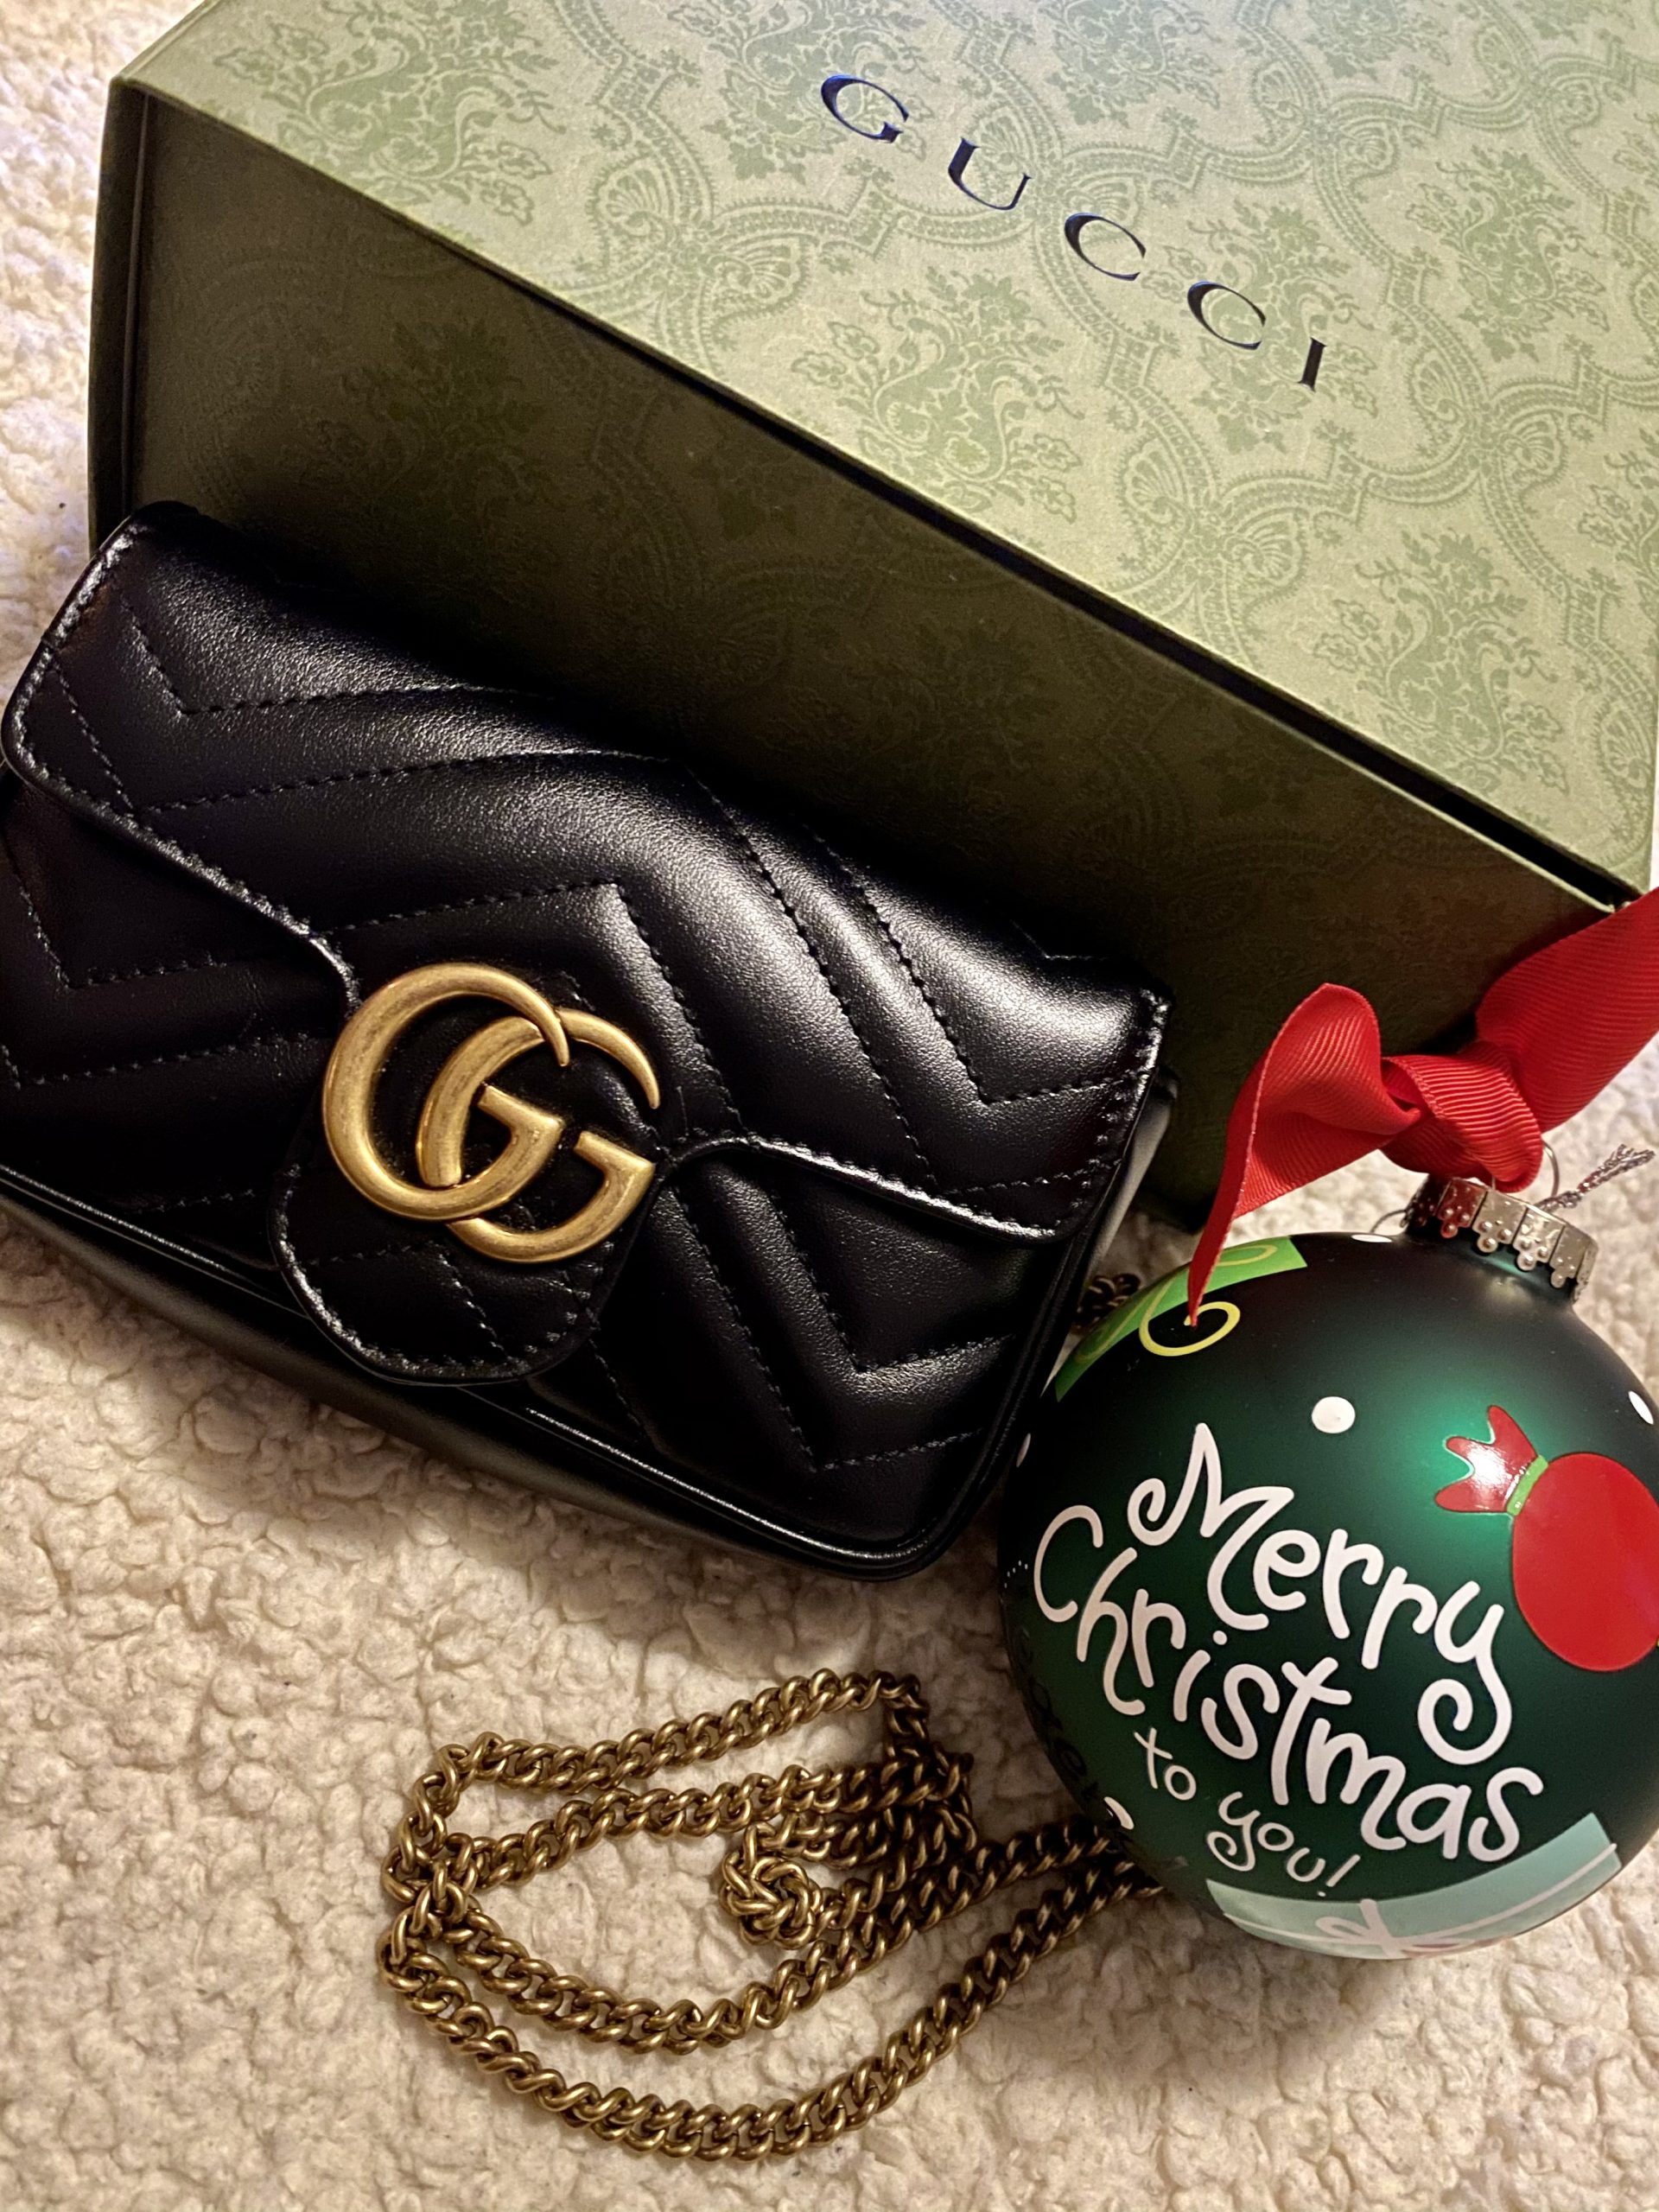 Gucci Marmont Super Mini Bag Review 